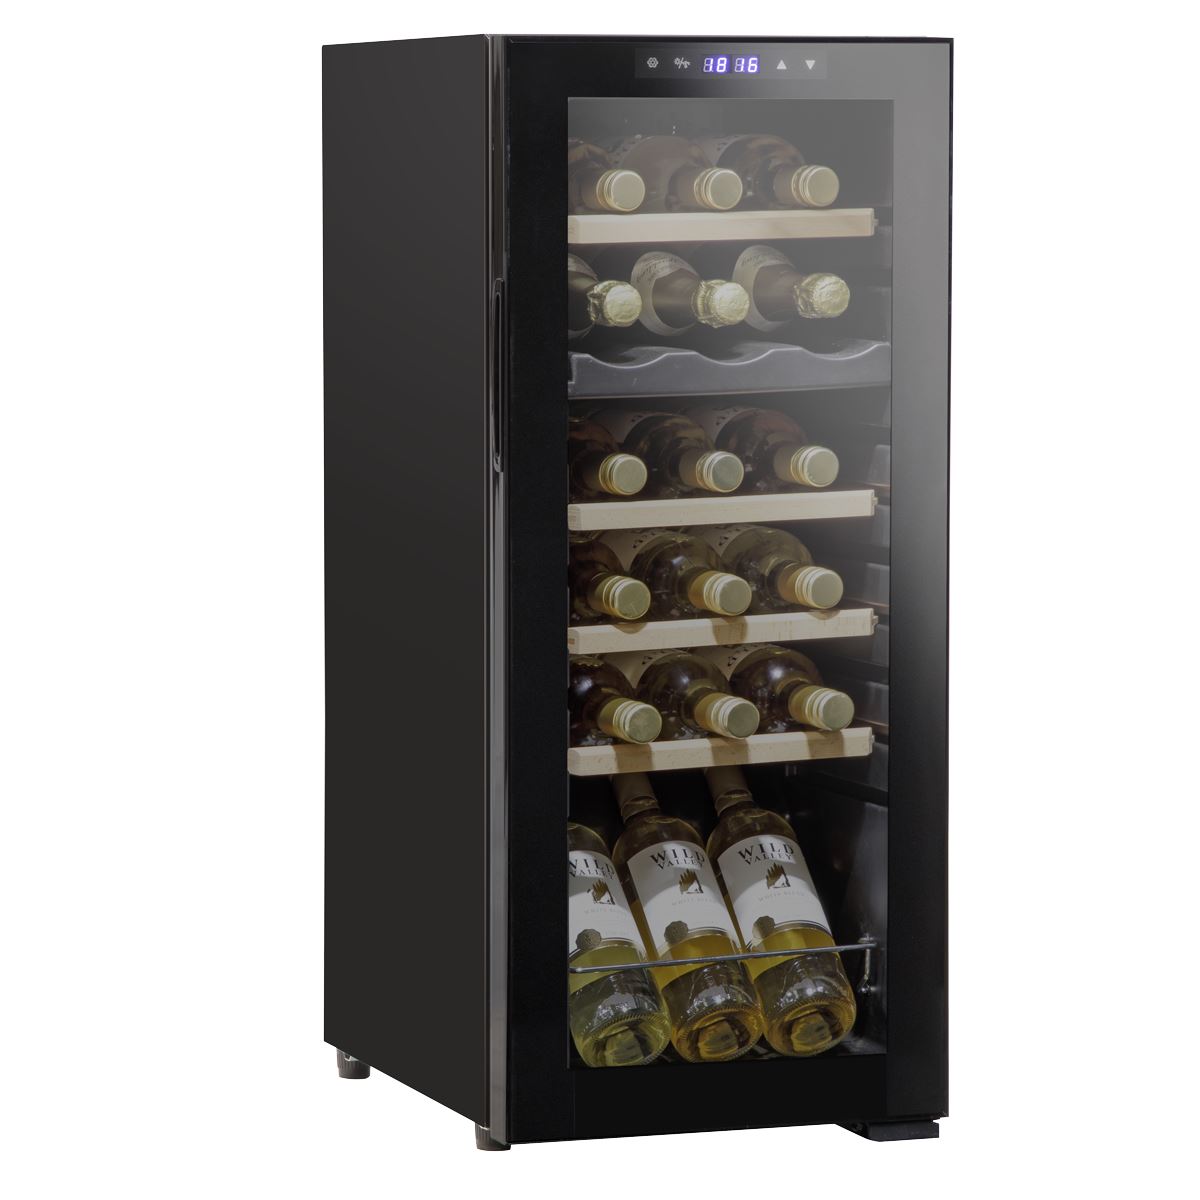 Baridi 18 Bottle Dual Zone Wine Cooler, Fridge with Digital Touch Screen Controls, Wooden Shelves & LED Light, Black